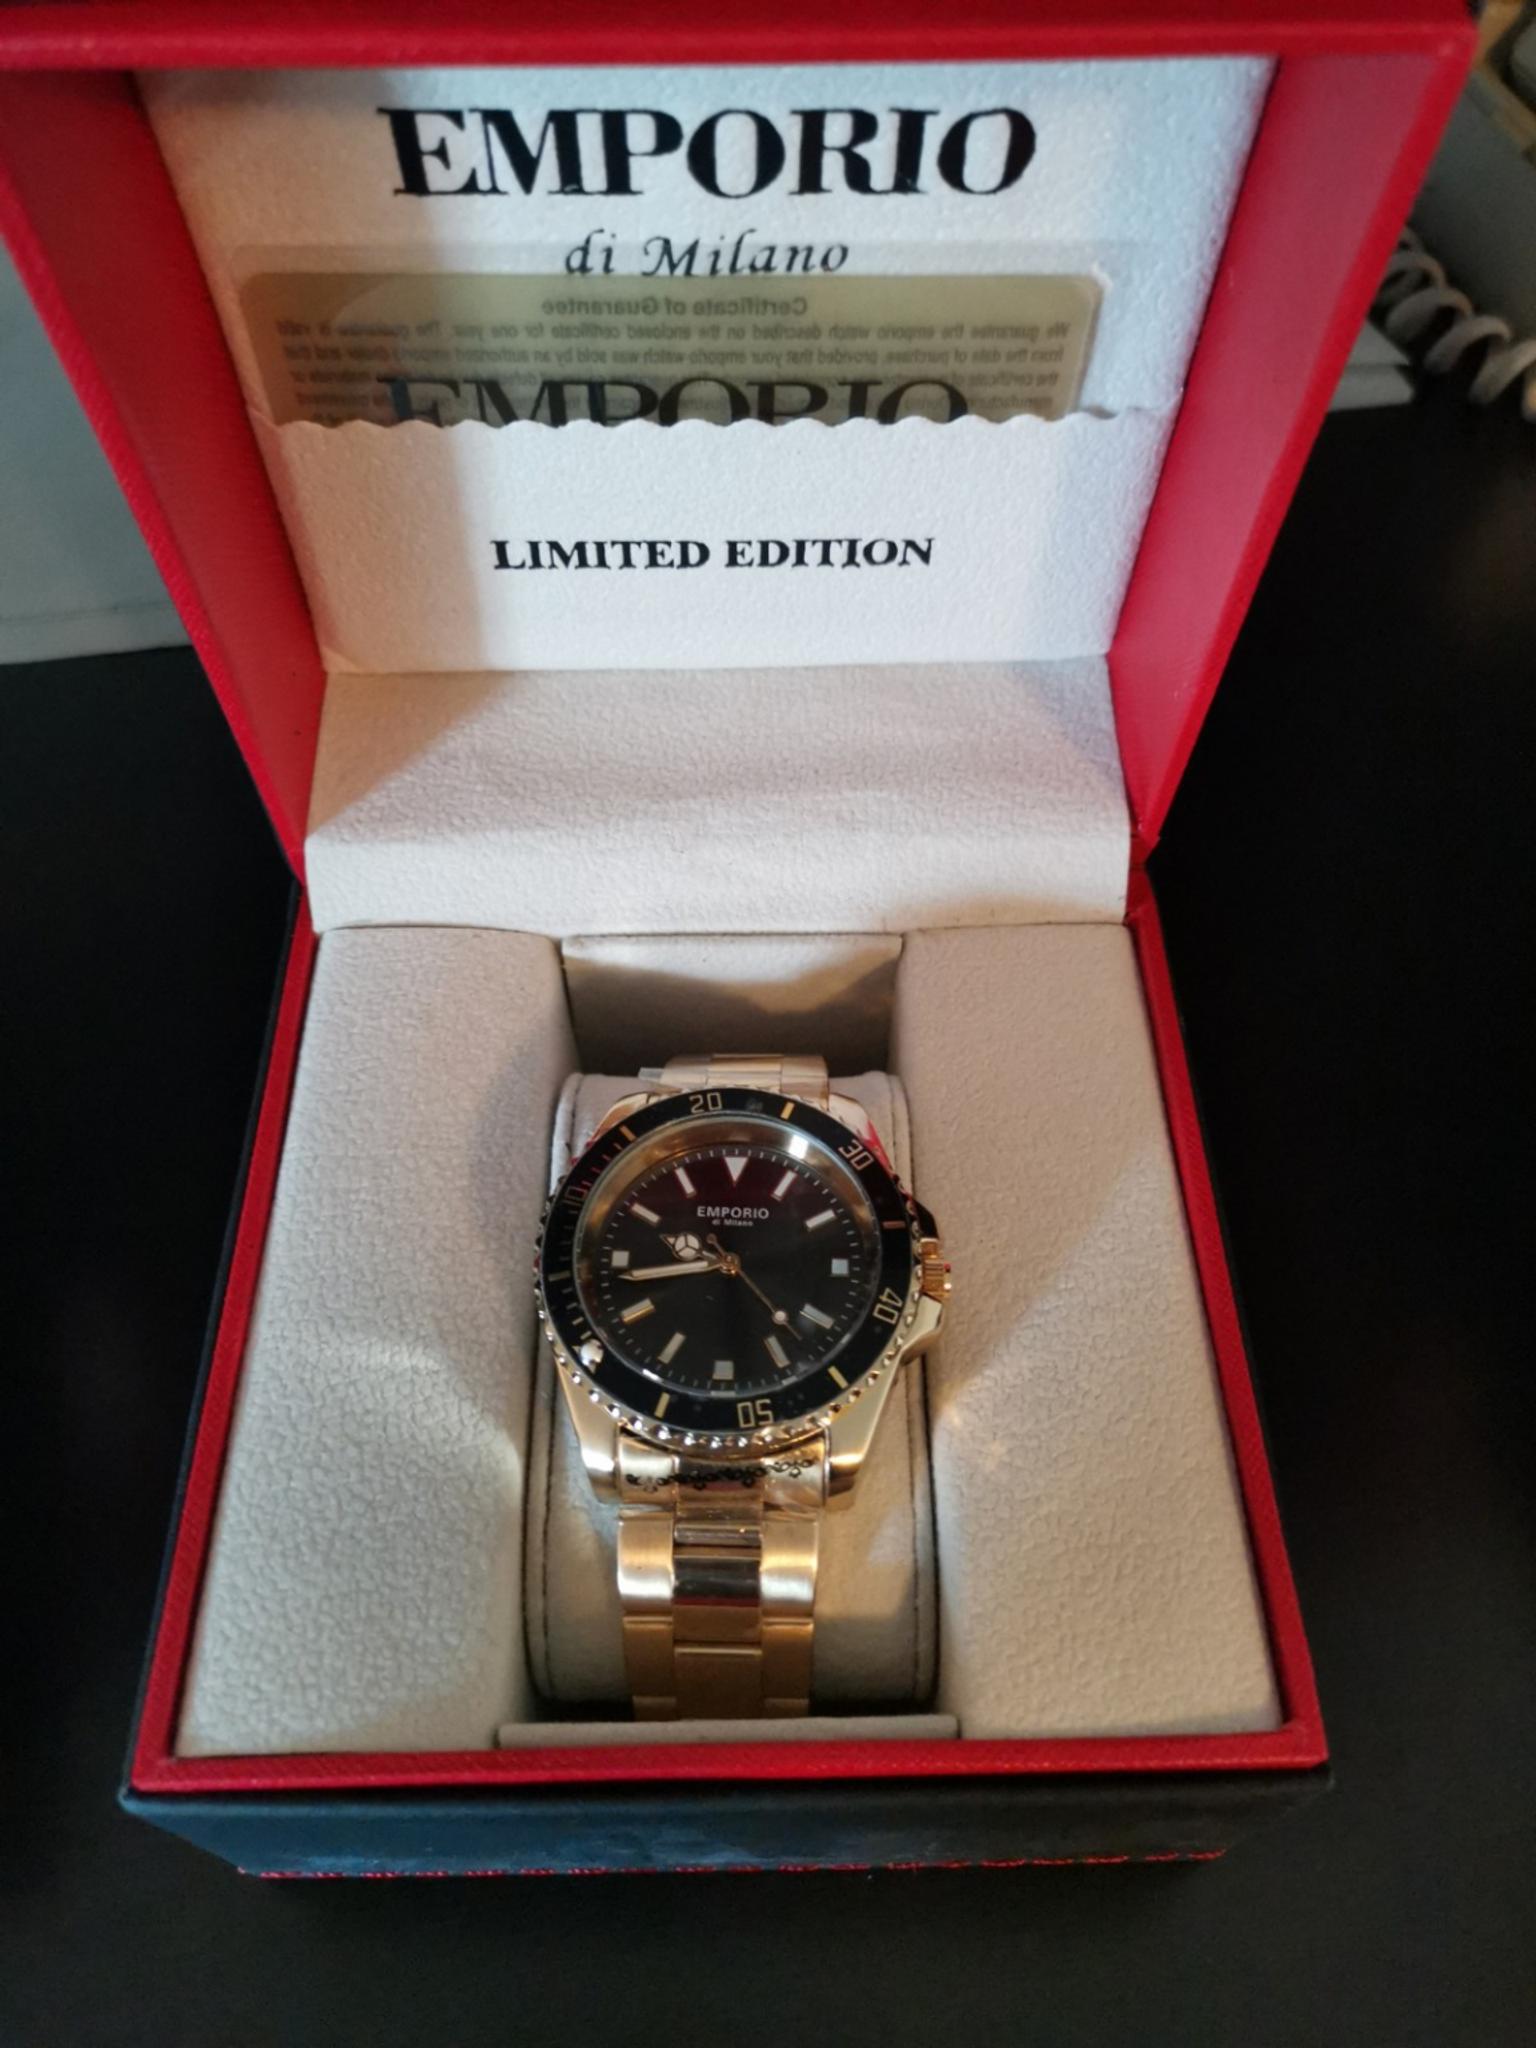 emporio di milano watch limited edition